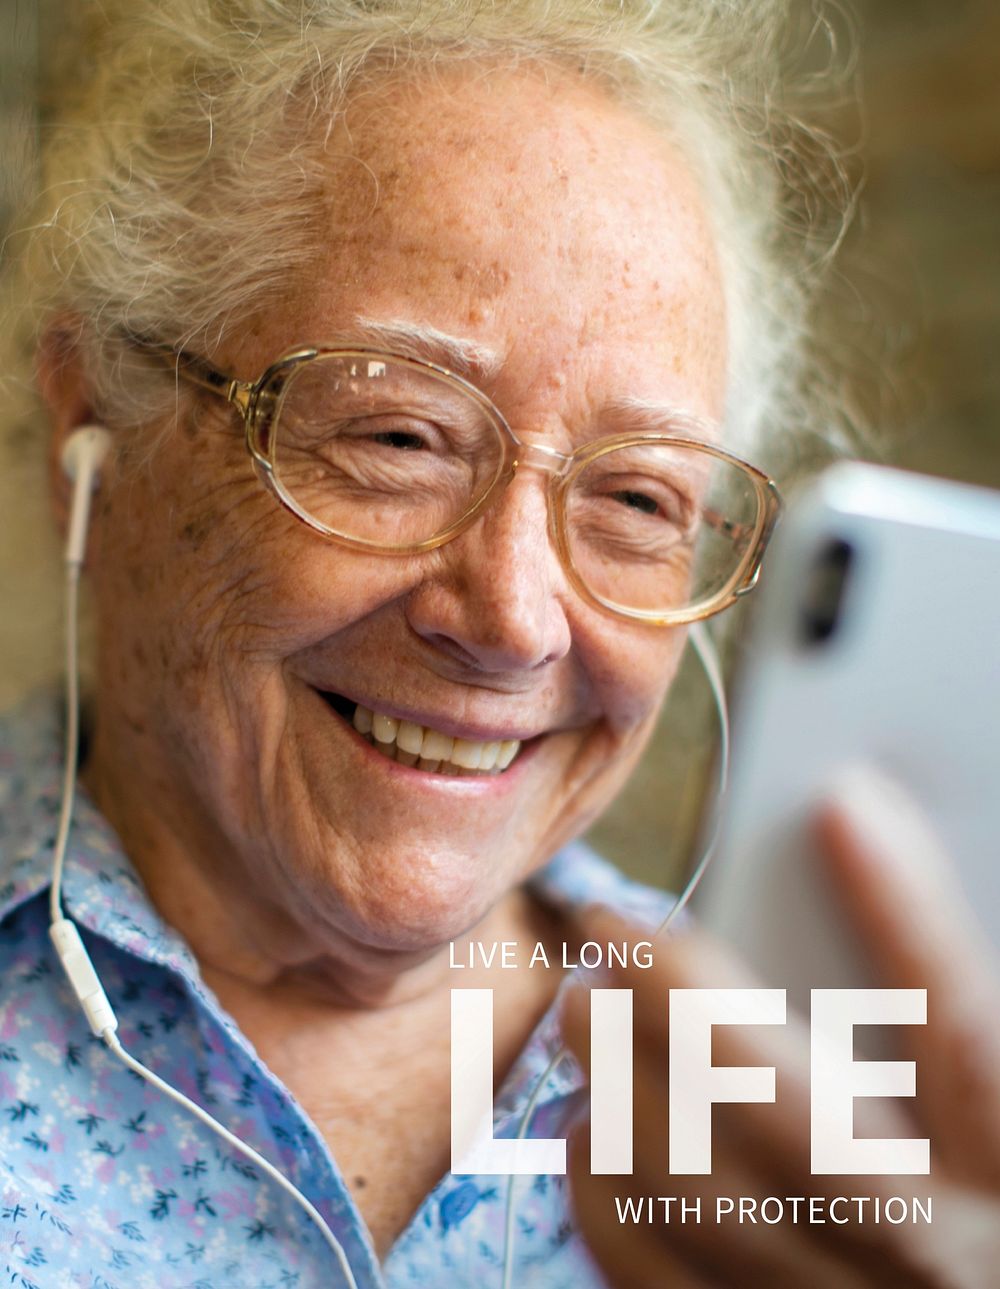 Long life insurance template vector for elderlies ad poster